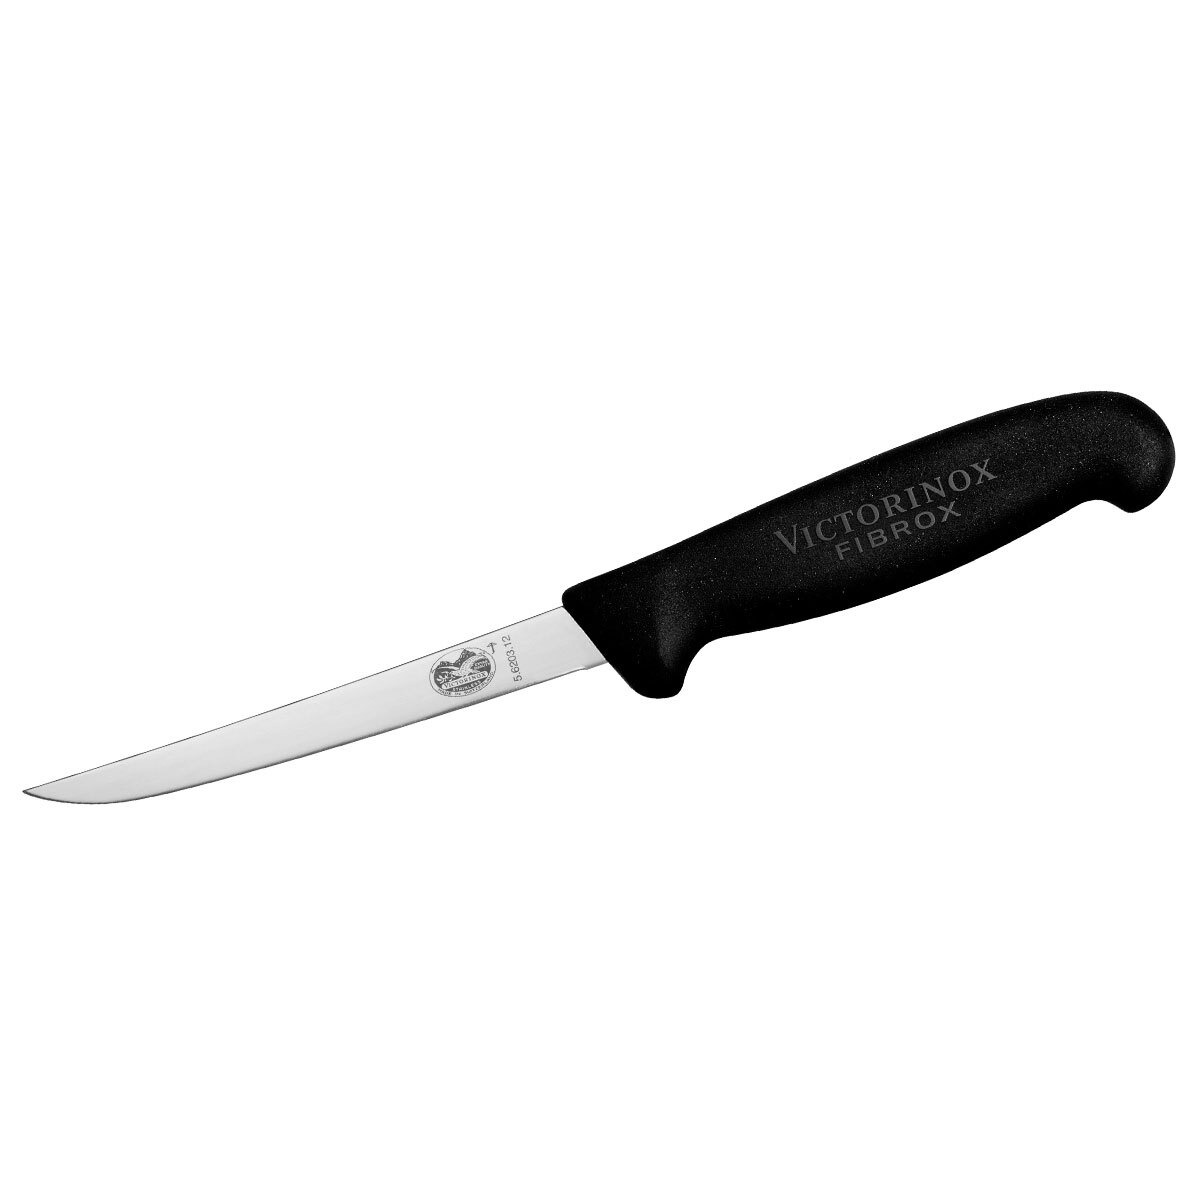 Victorinox Boning Knife, 12cm (5) - Very Narrow Blade - Black